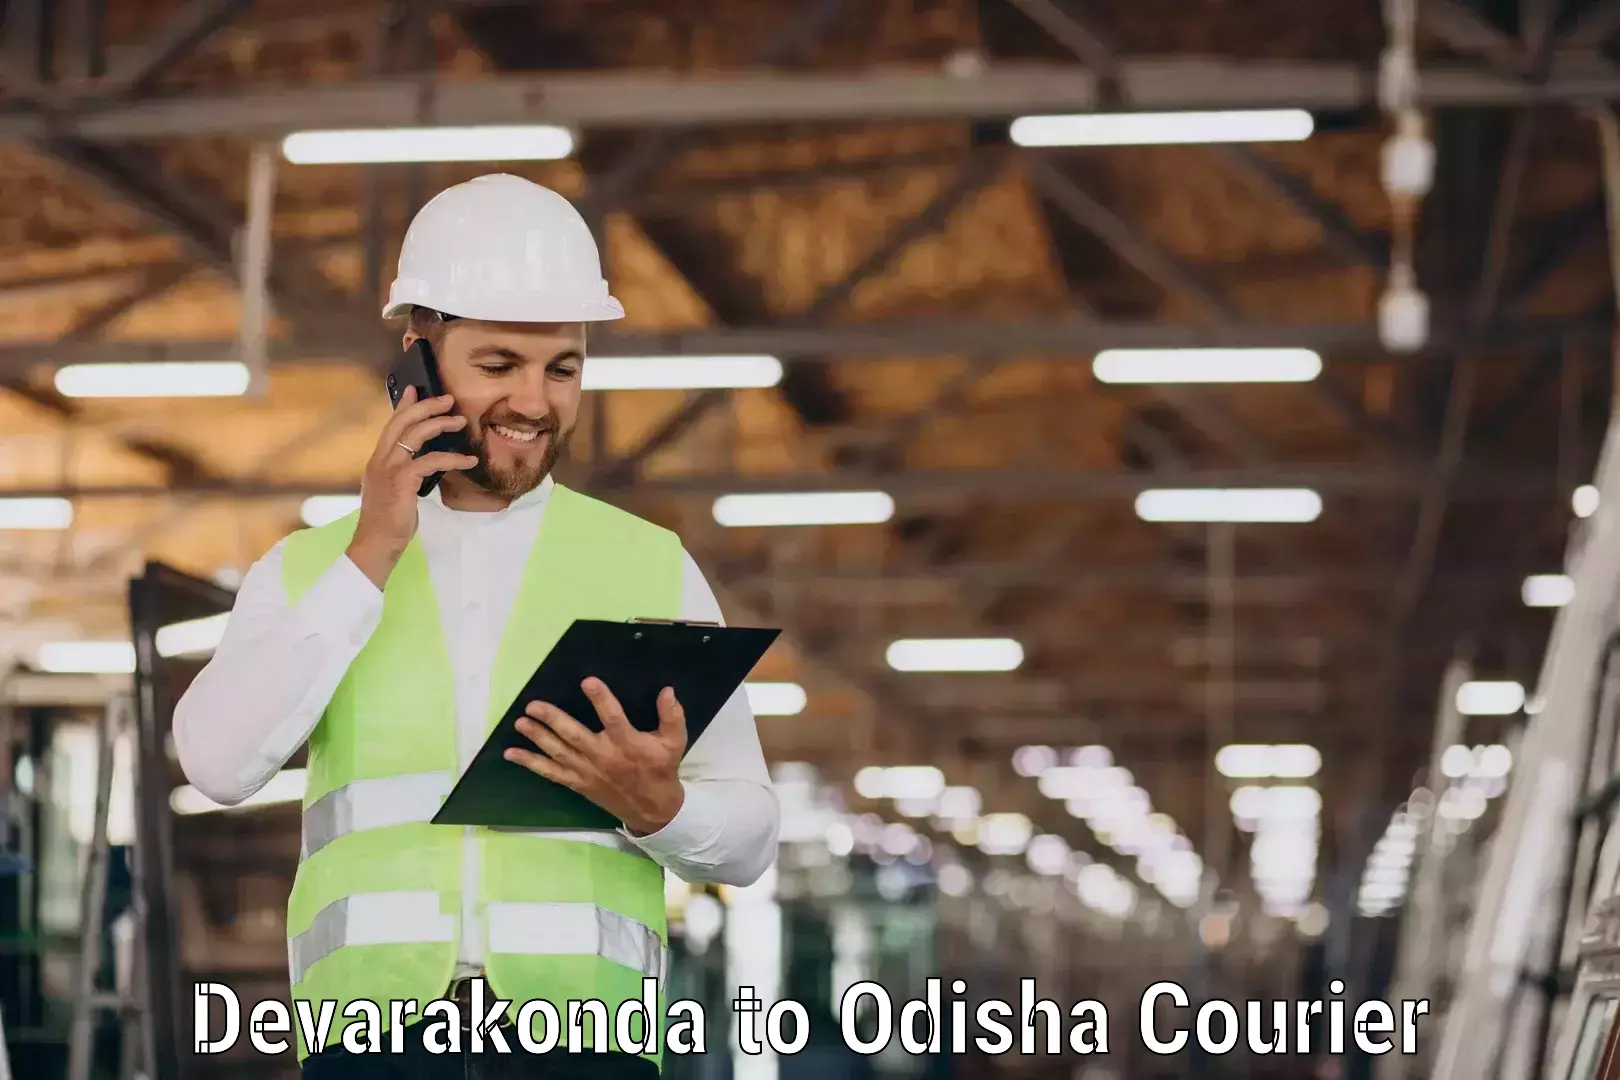 User-friendly courier app Devarakonda to Bhuban